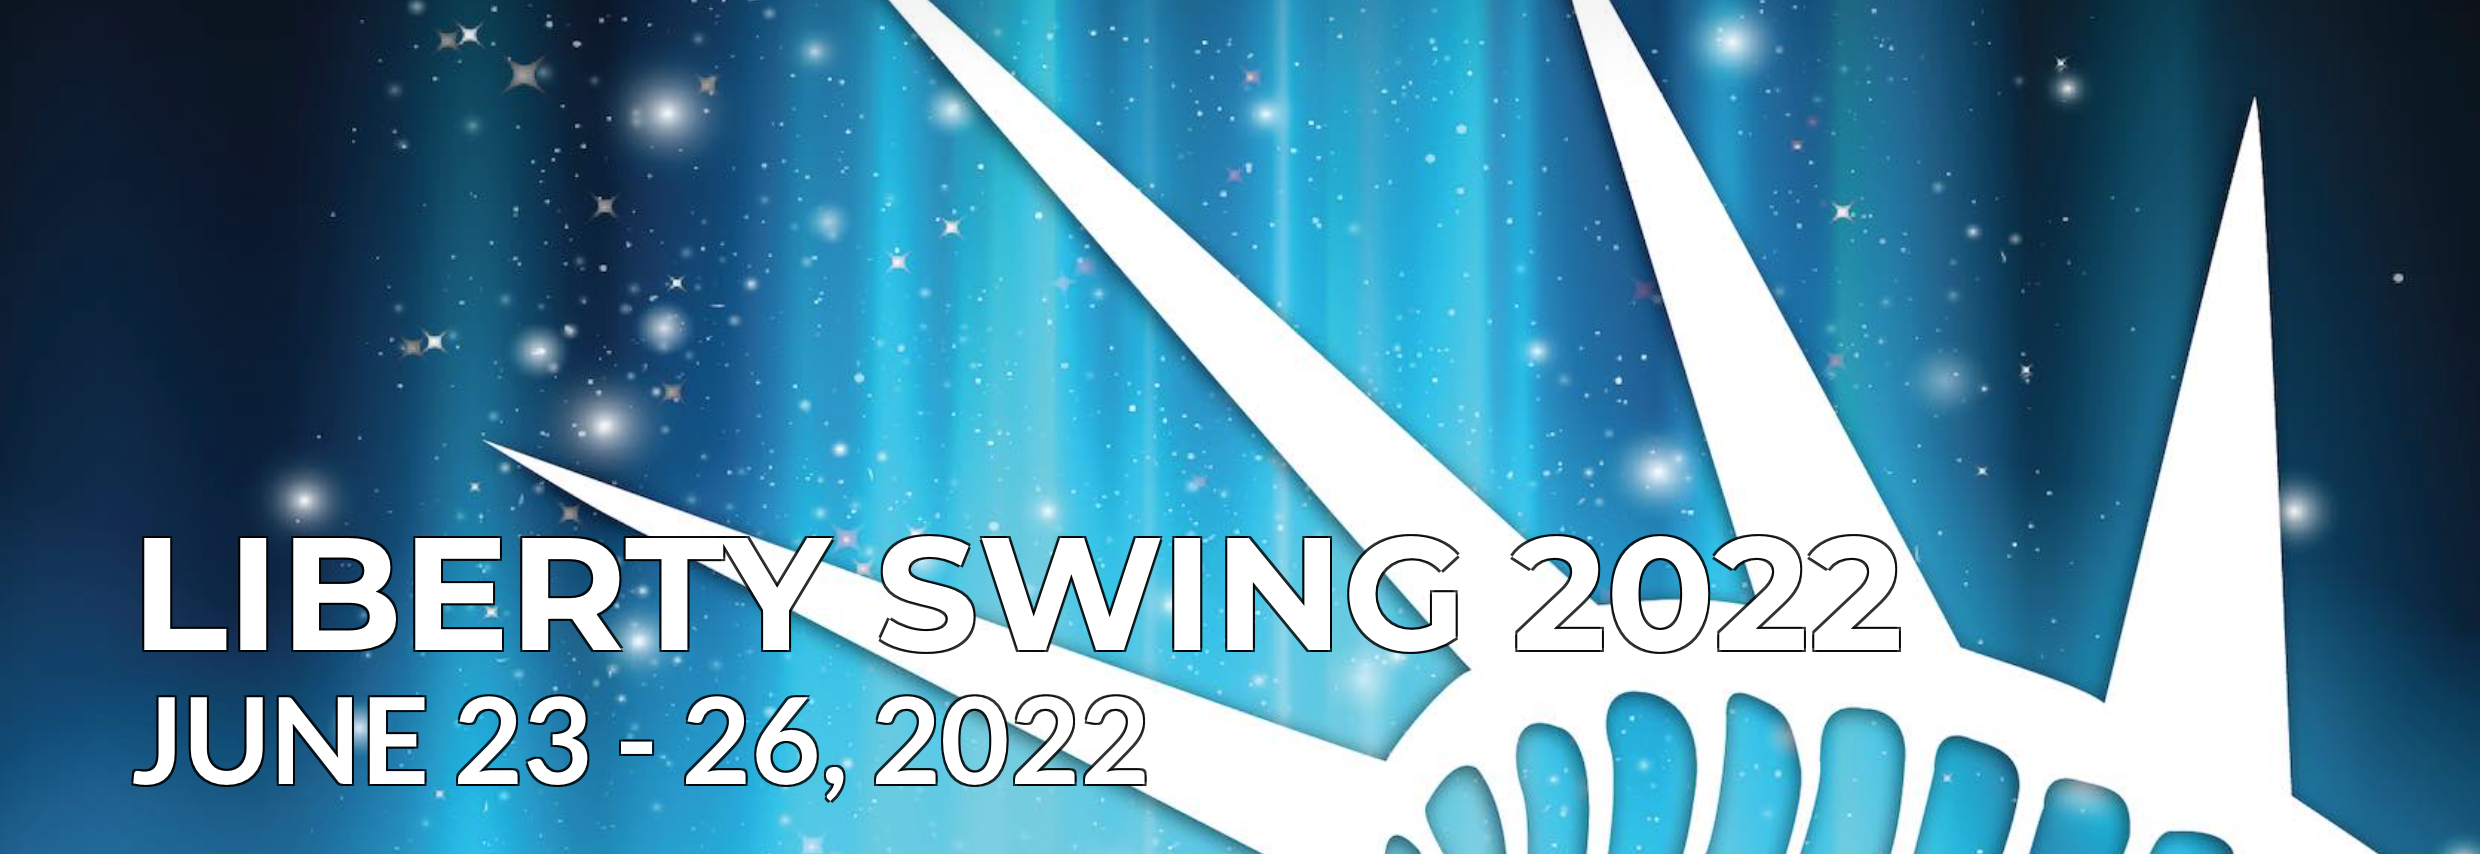 Liberty Swing 2022